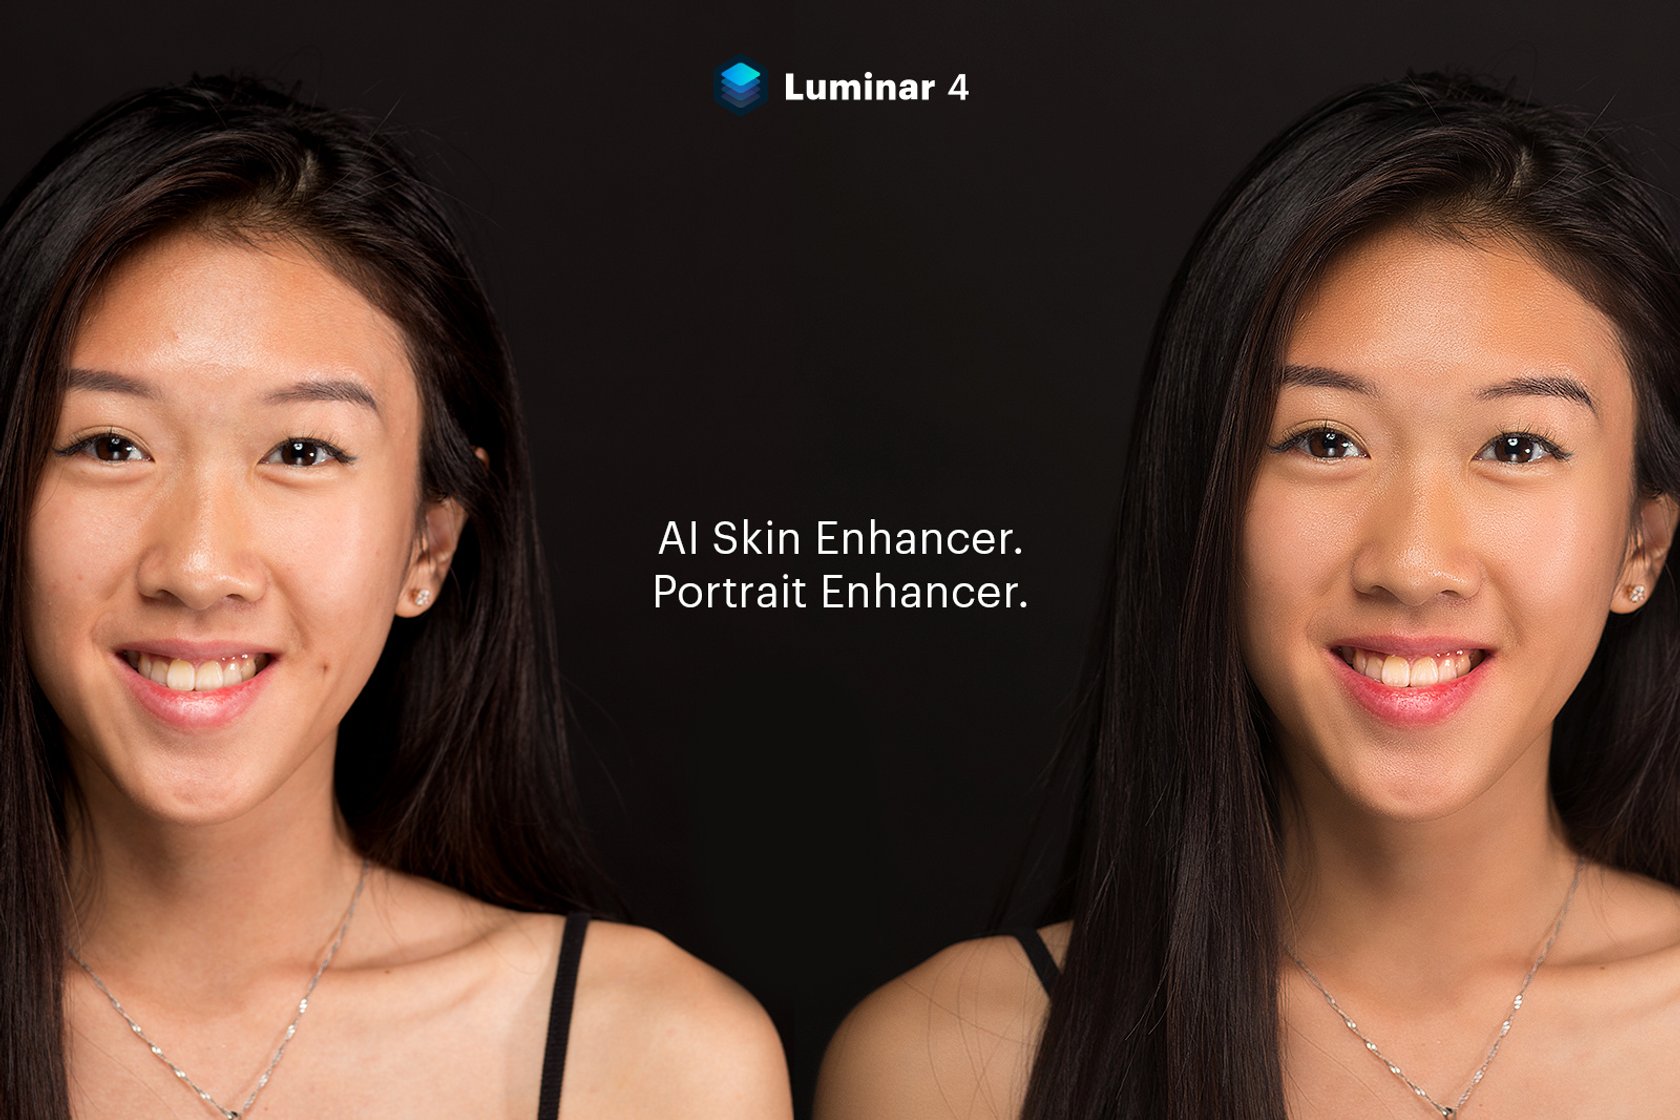 Make your portraits shine with Luminar 4 Image2